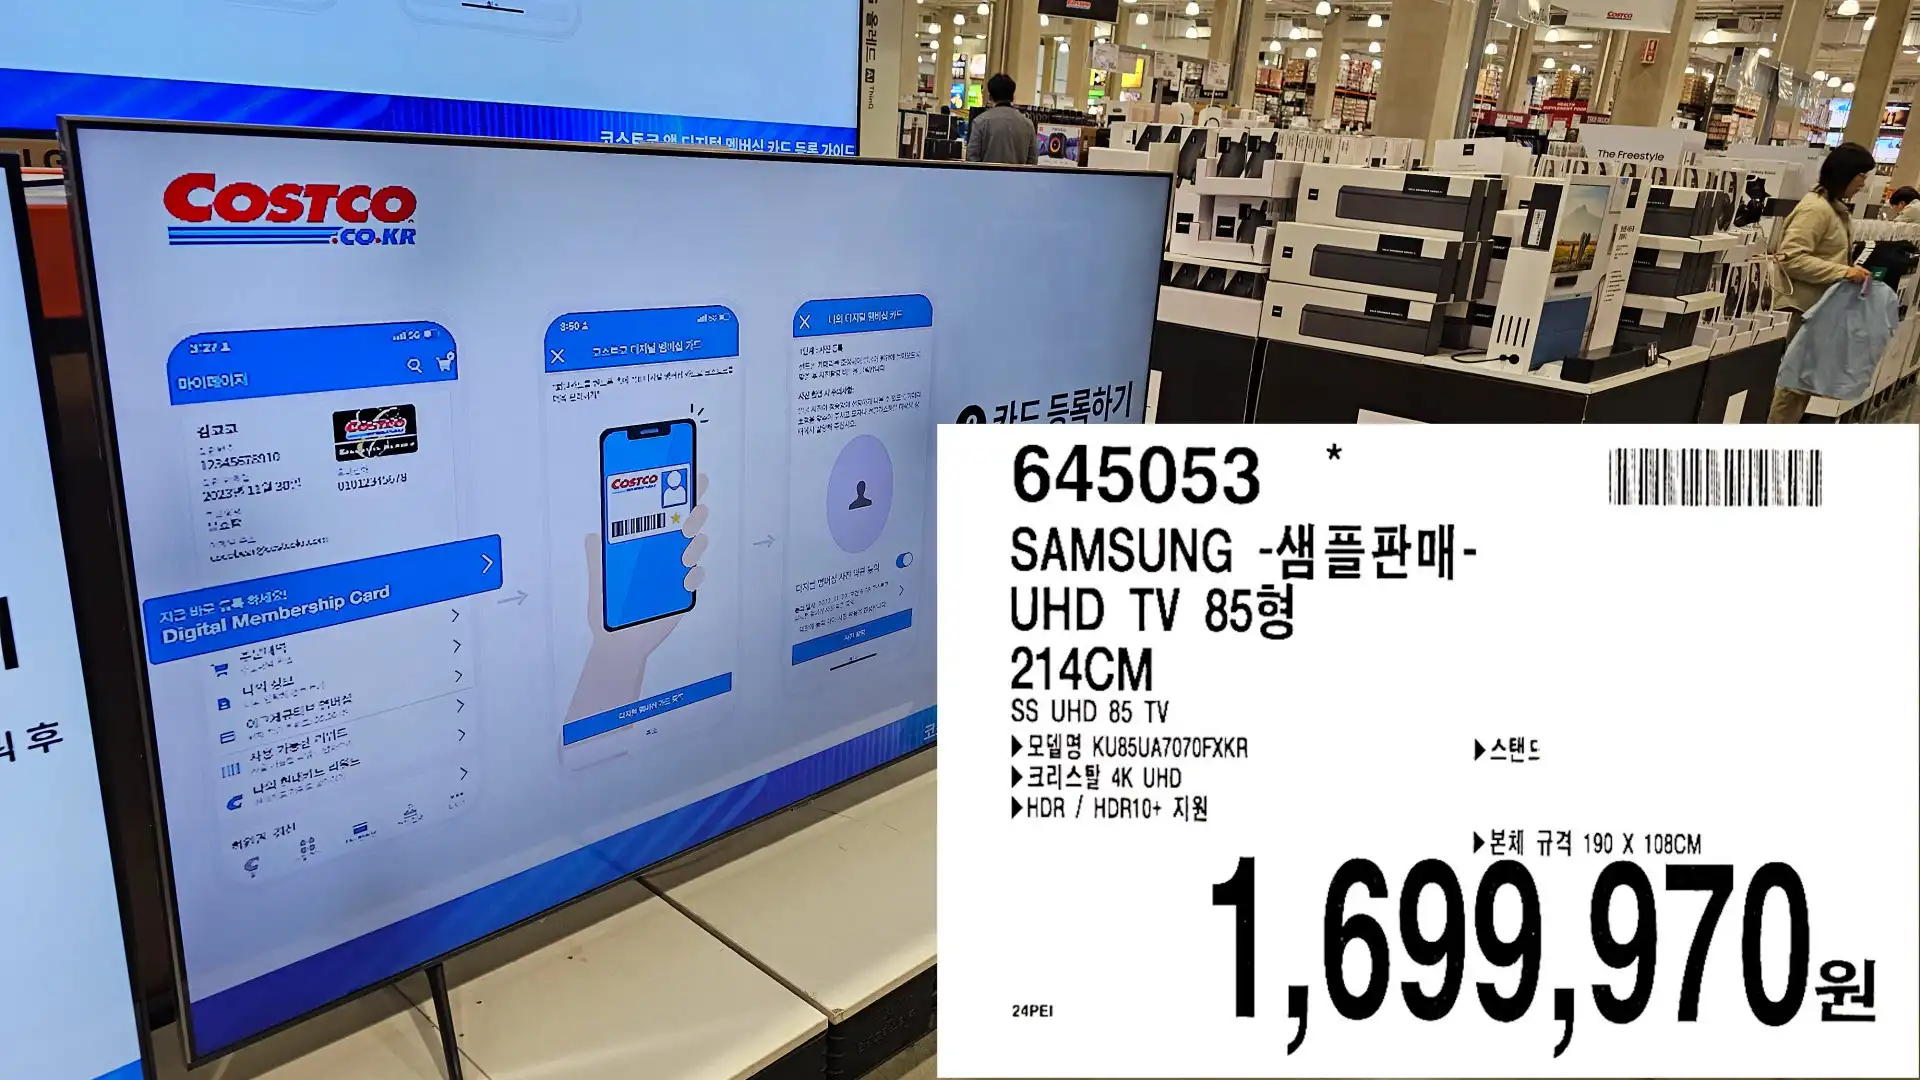 SAMSUNG -샘플판매-
UHD TV 85형